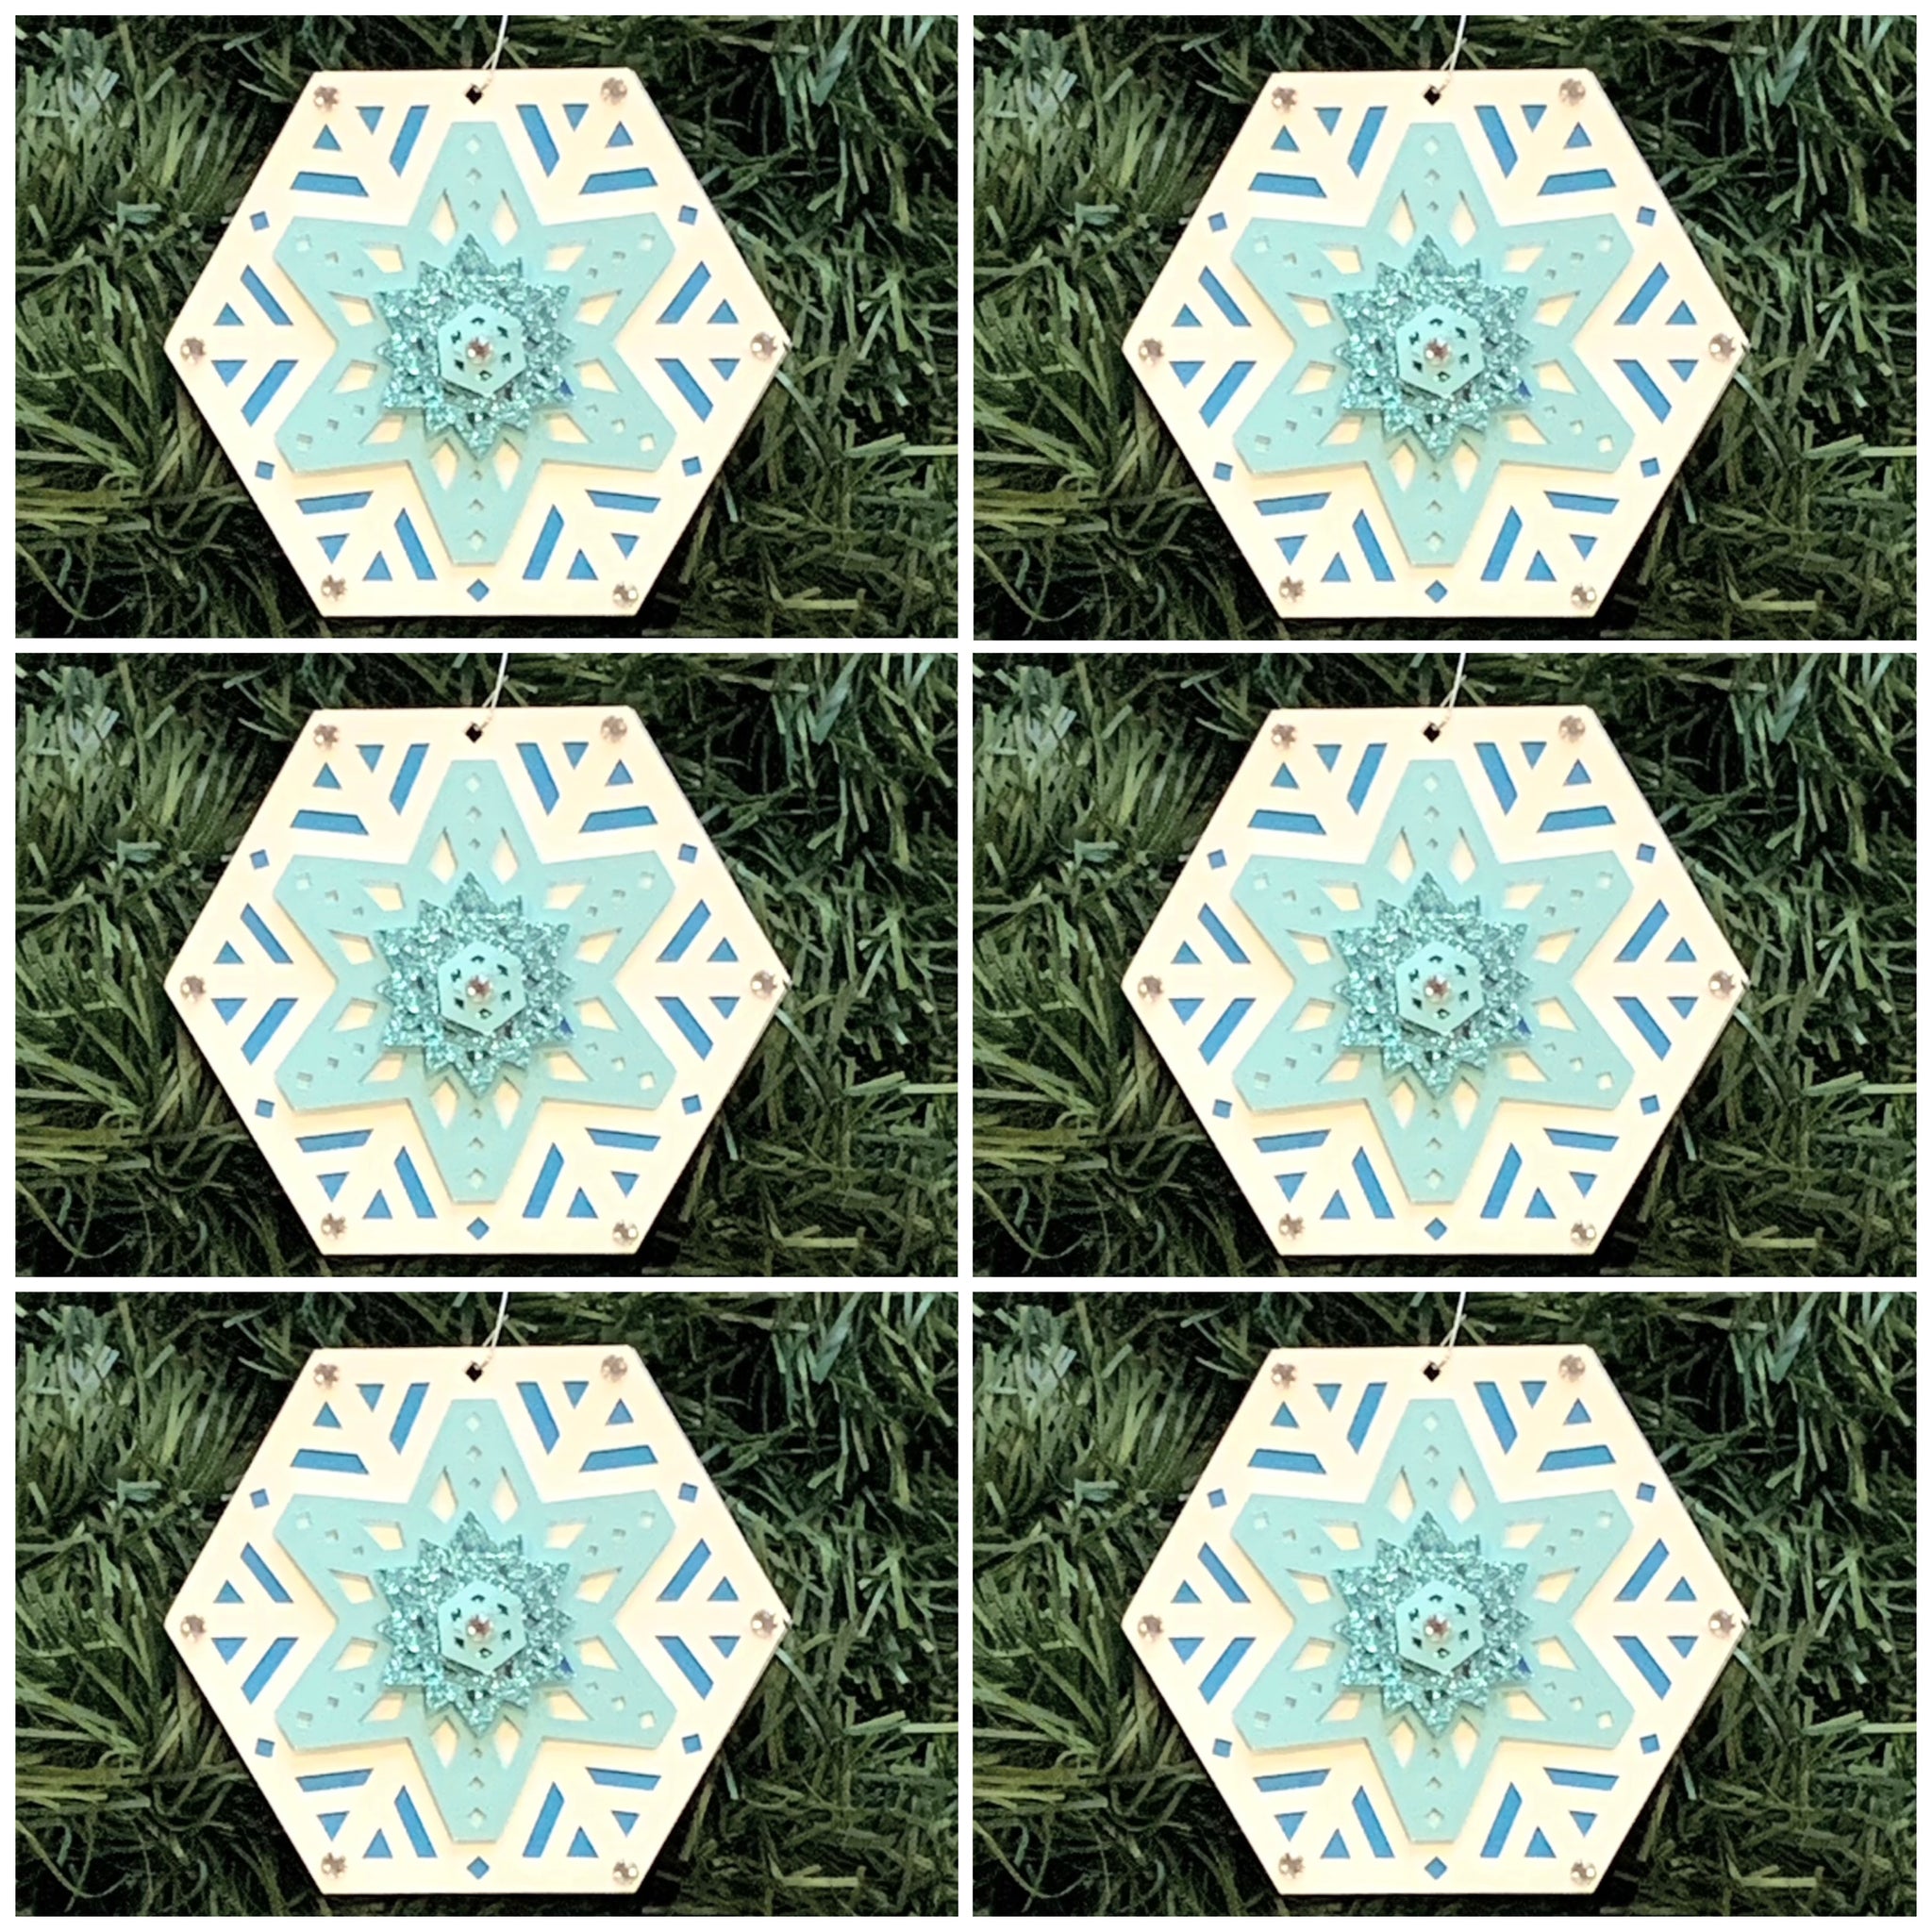 Snow Flake ornament (set of 6)